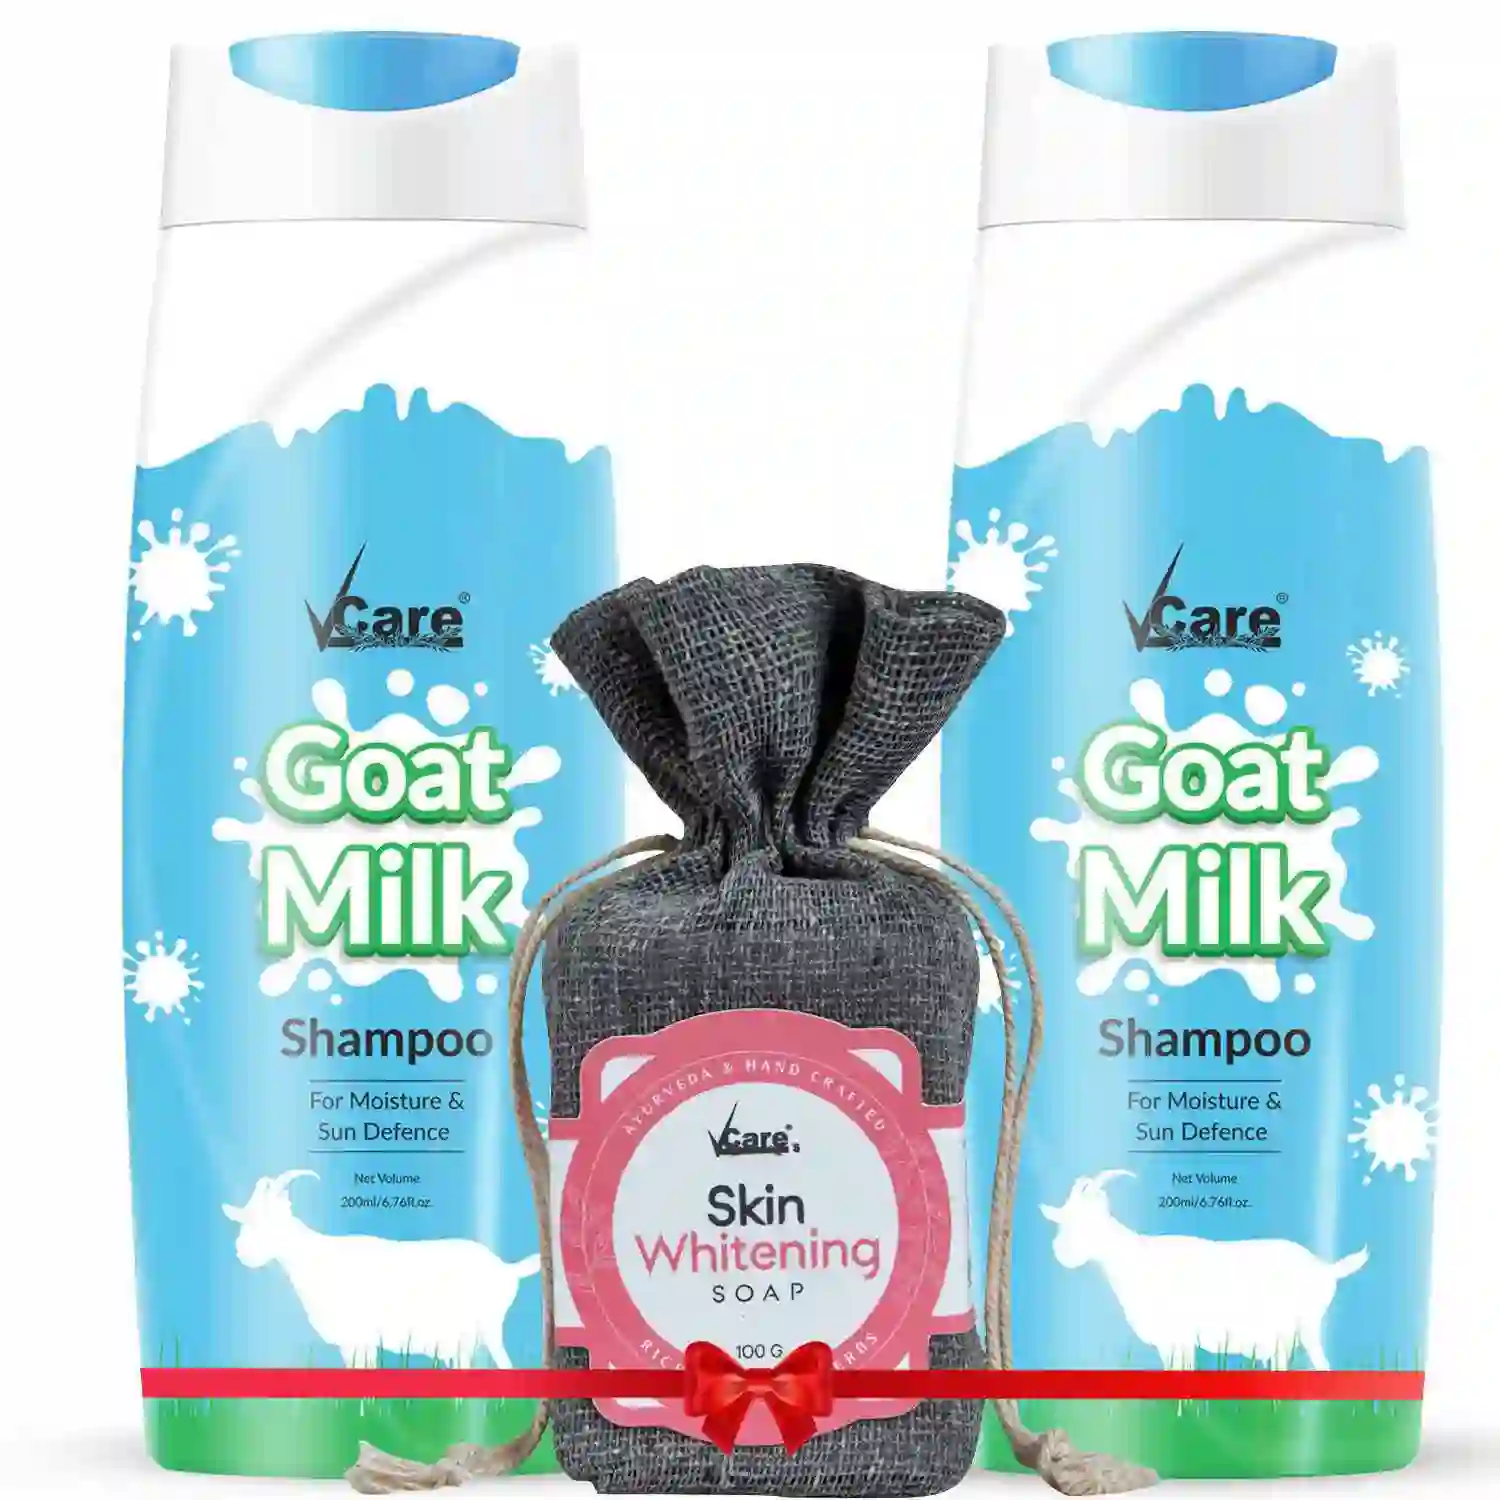 goat milk shampoo